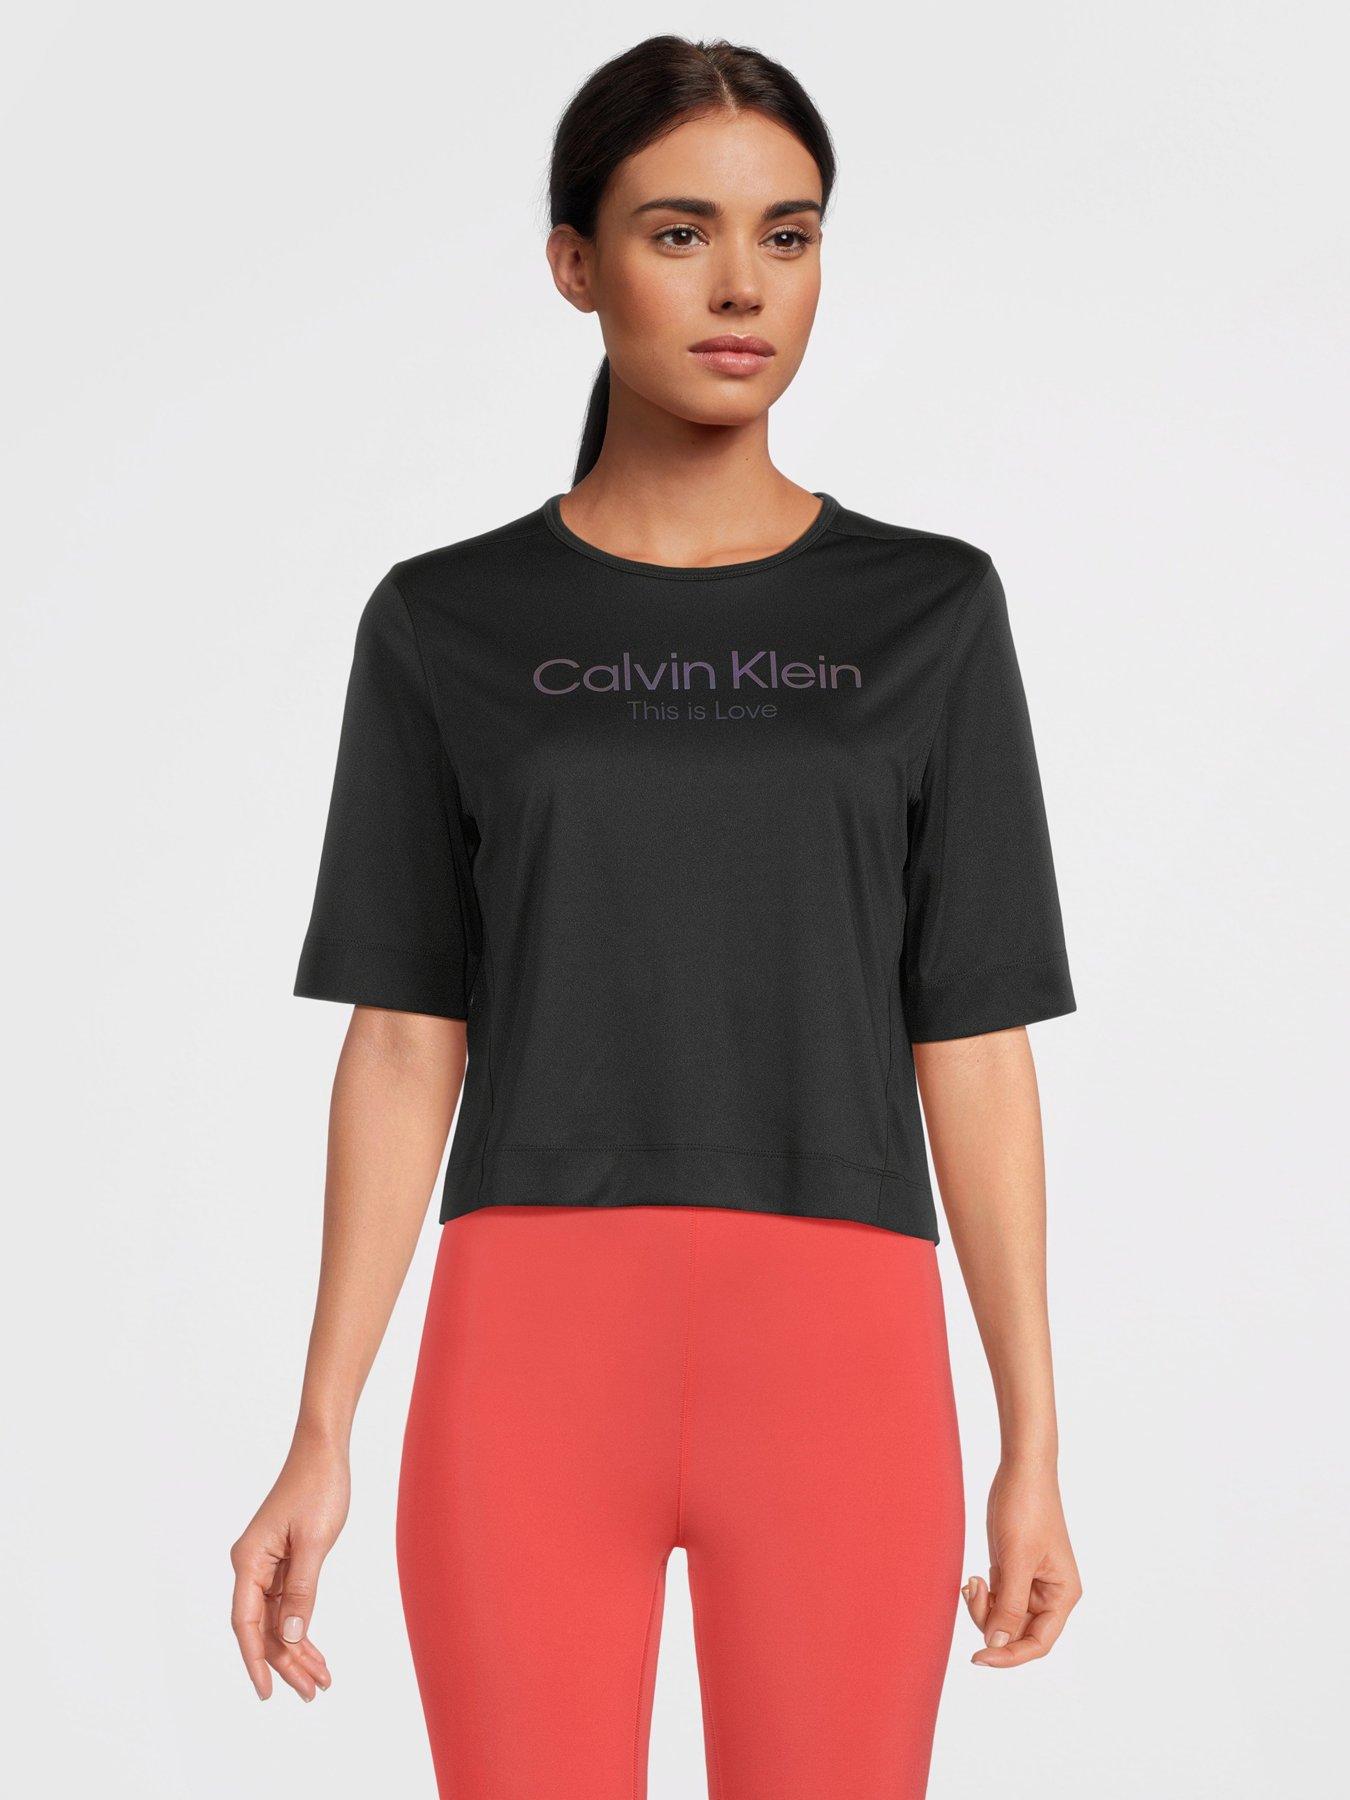 Calvin Klein Pride Bras for Women - Up to 73% off